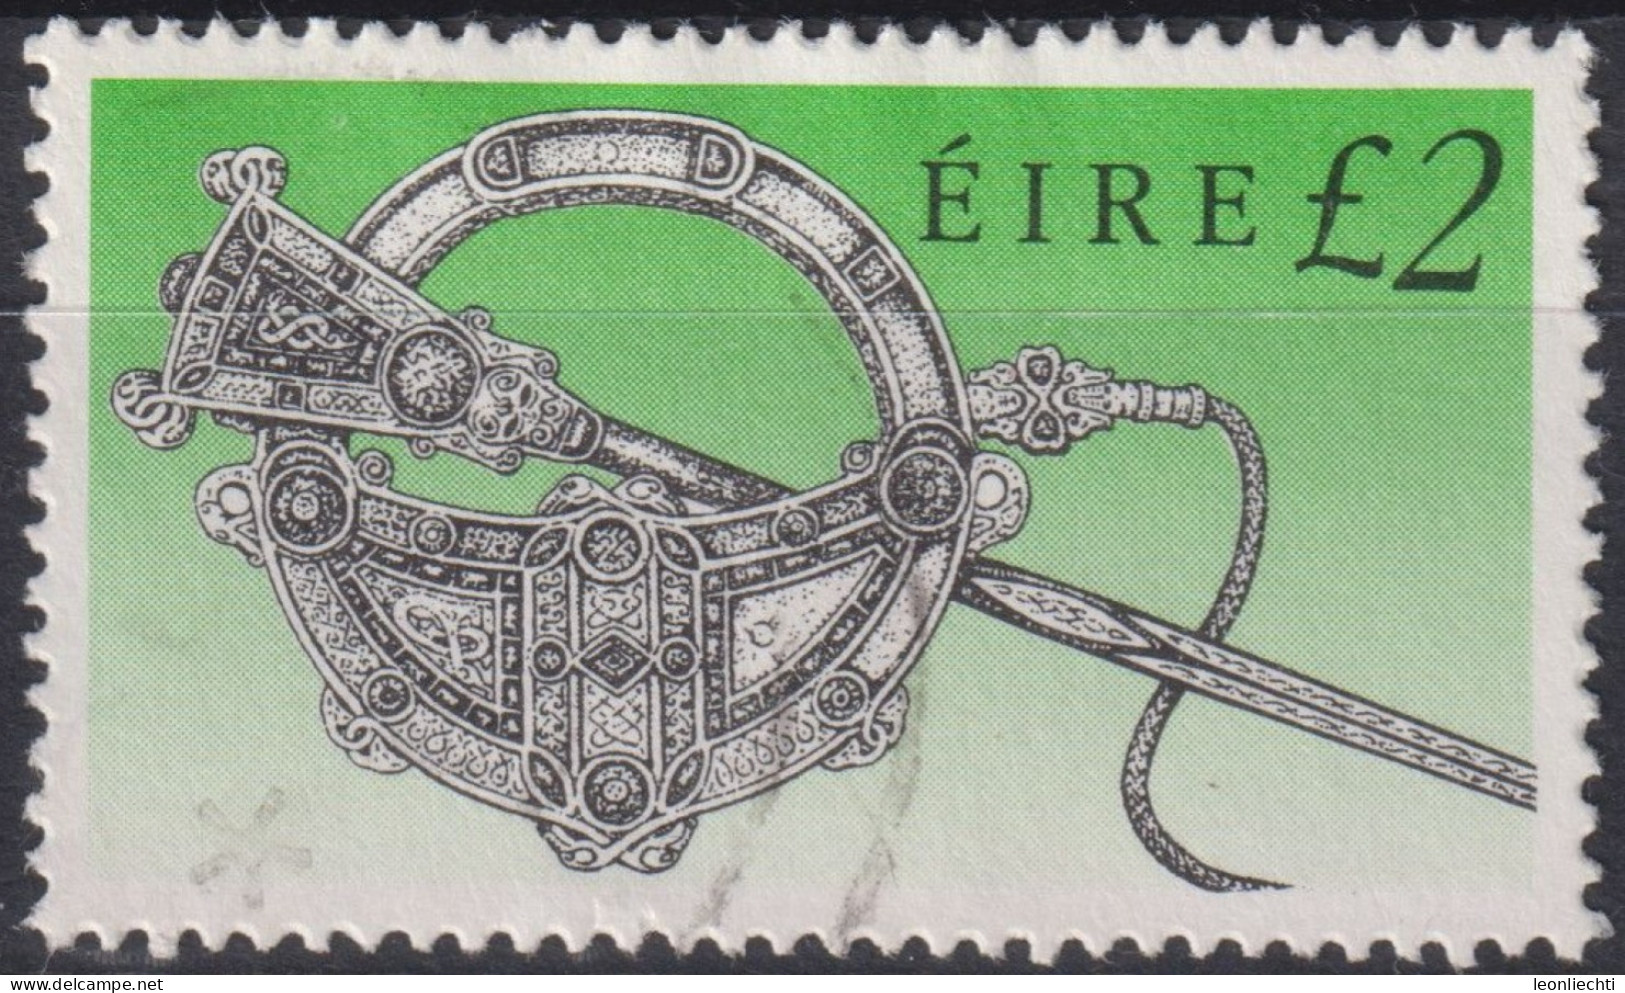 1990 Republik Irland ° Mi:IE 728I, Sn:IE 792, Yt:IE 731, Tara Brooch (7th Century) - Type C - Usati